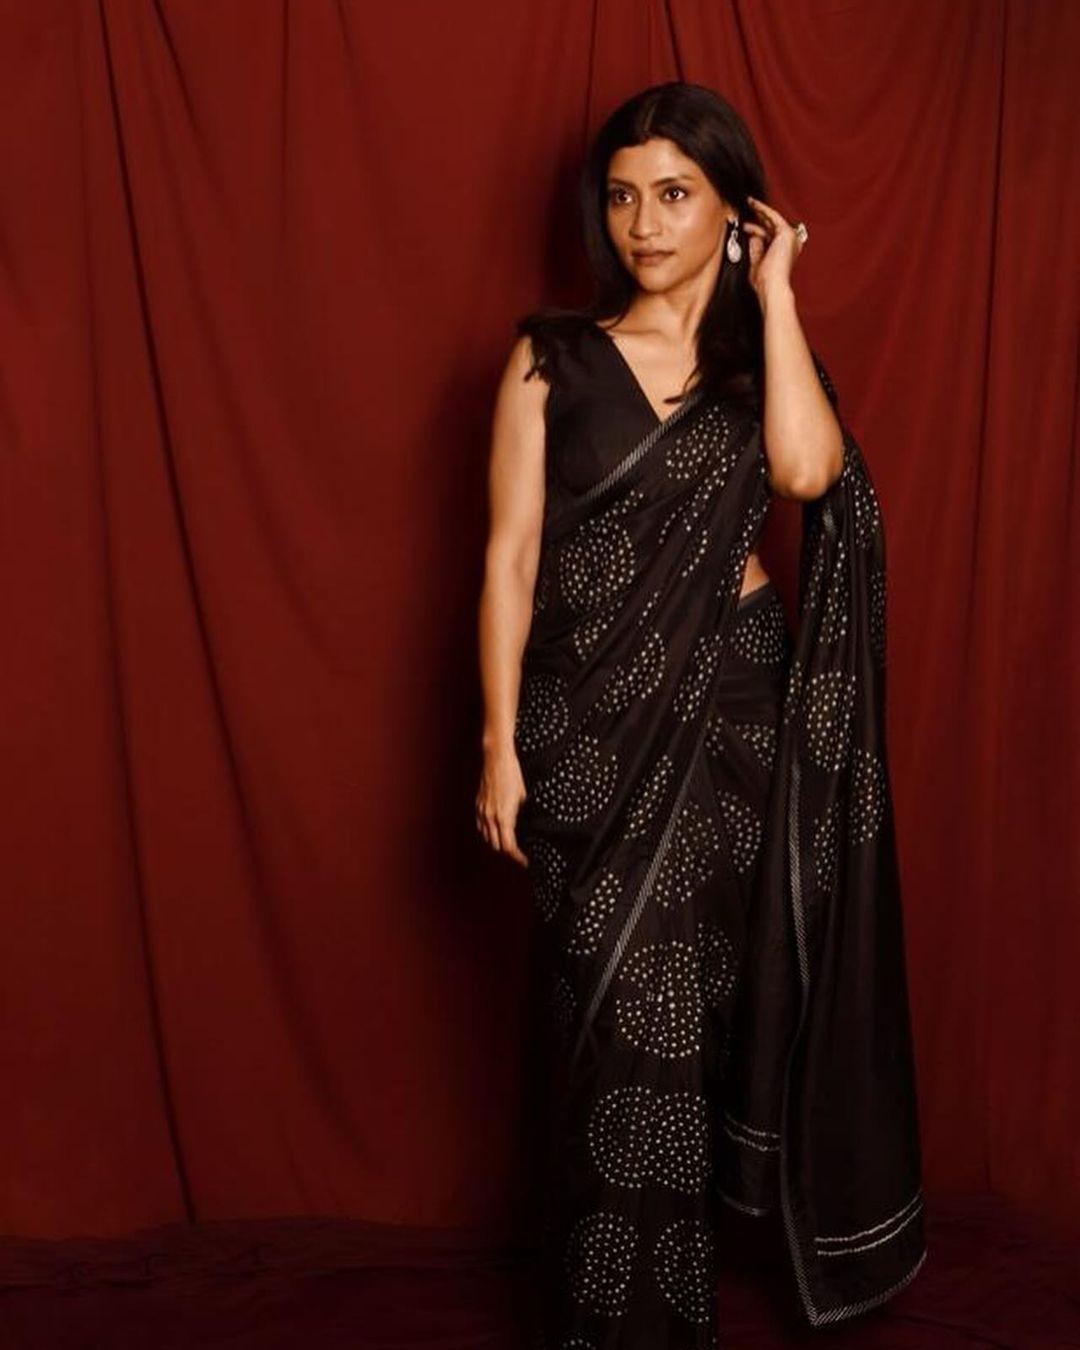 Konkona Sen Sharma looked stunning in a black saree featuring beautiful prints.